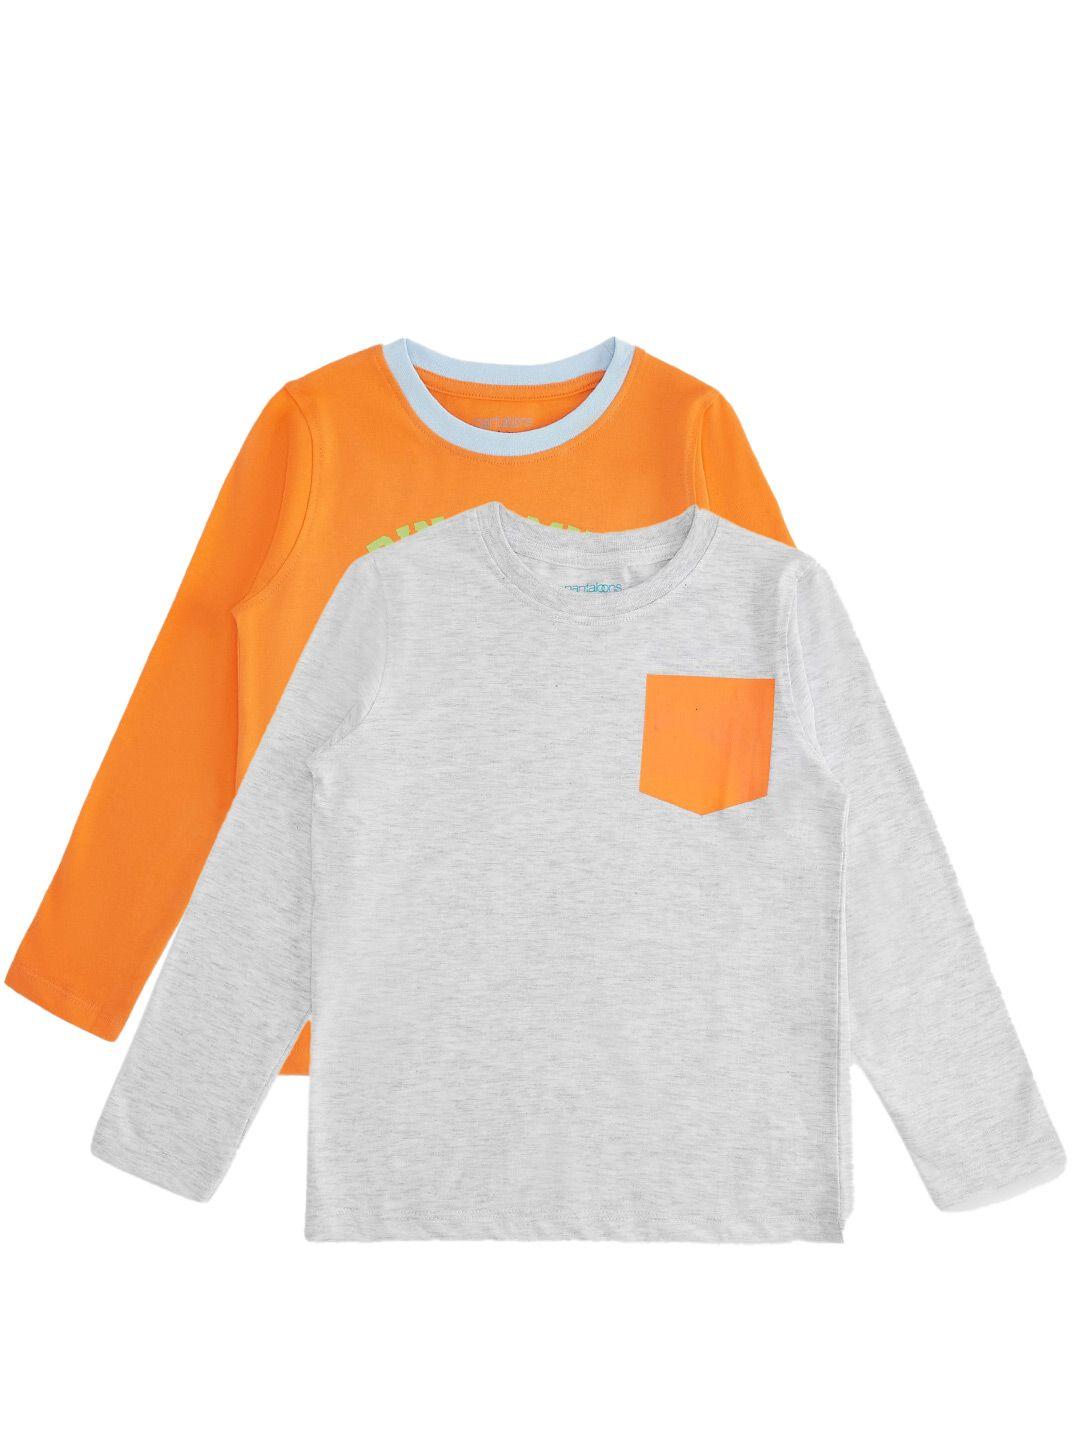 pantaloons junior boys orange & grey pack of 2 printed cotton t-shirt